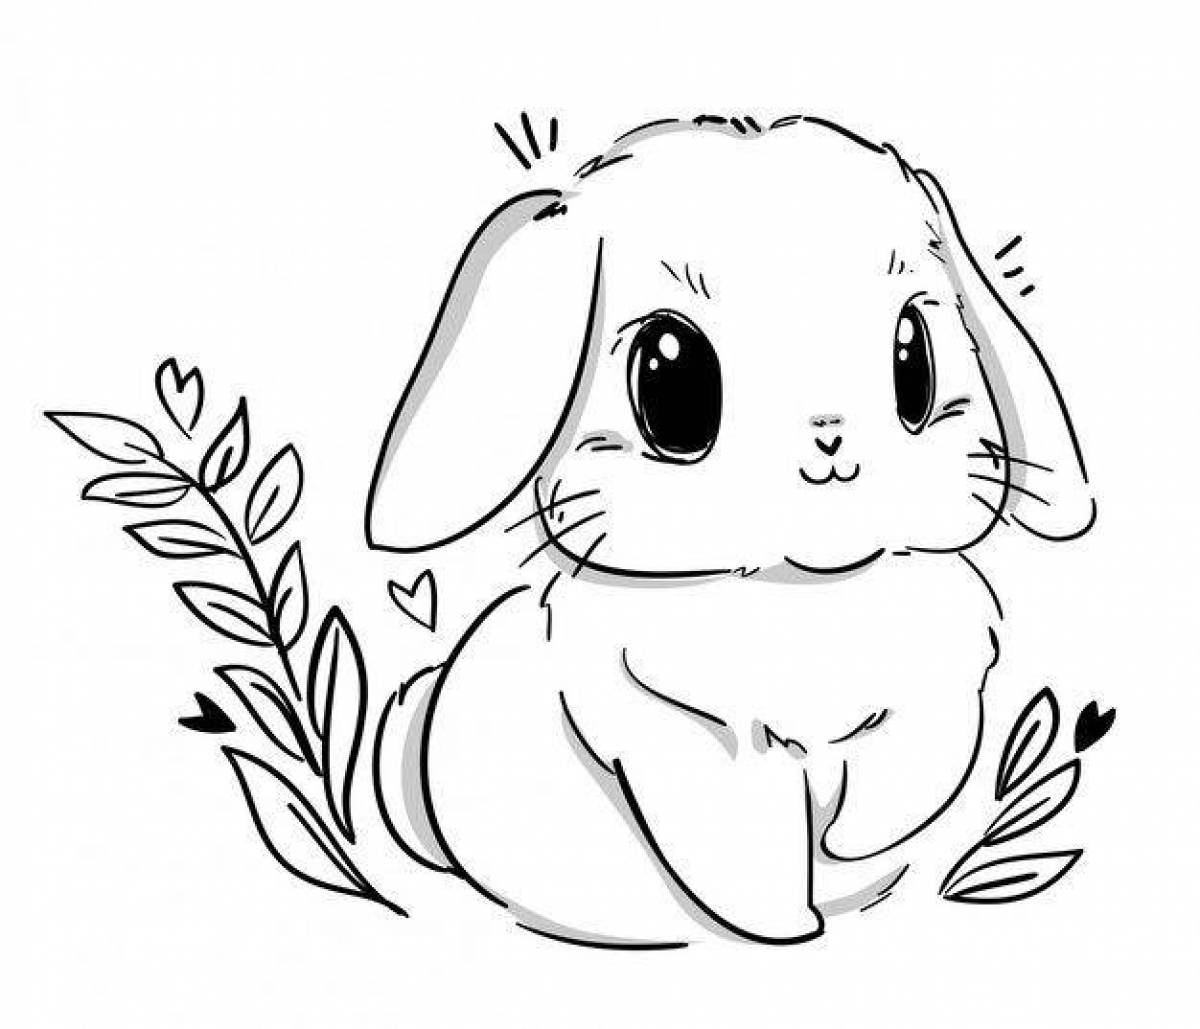 Cute and joyful rabbit coloring book